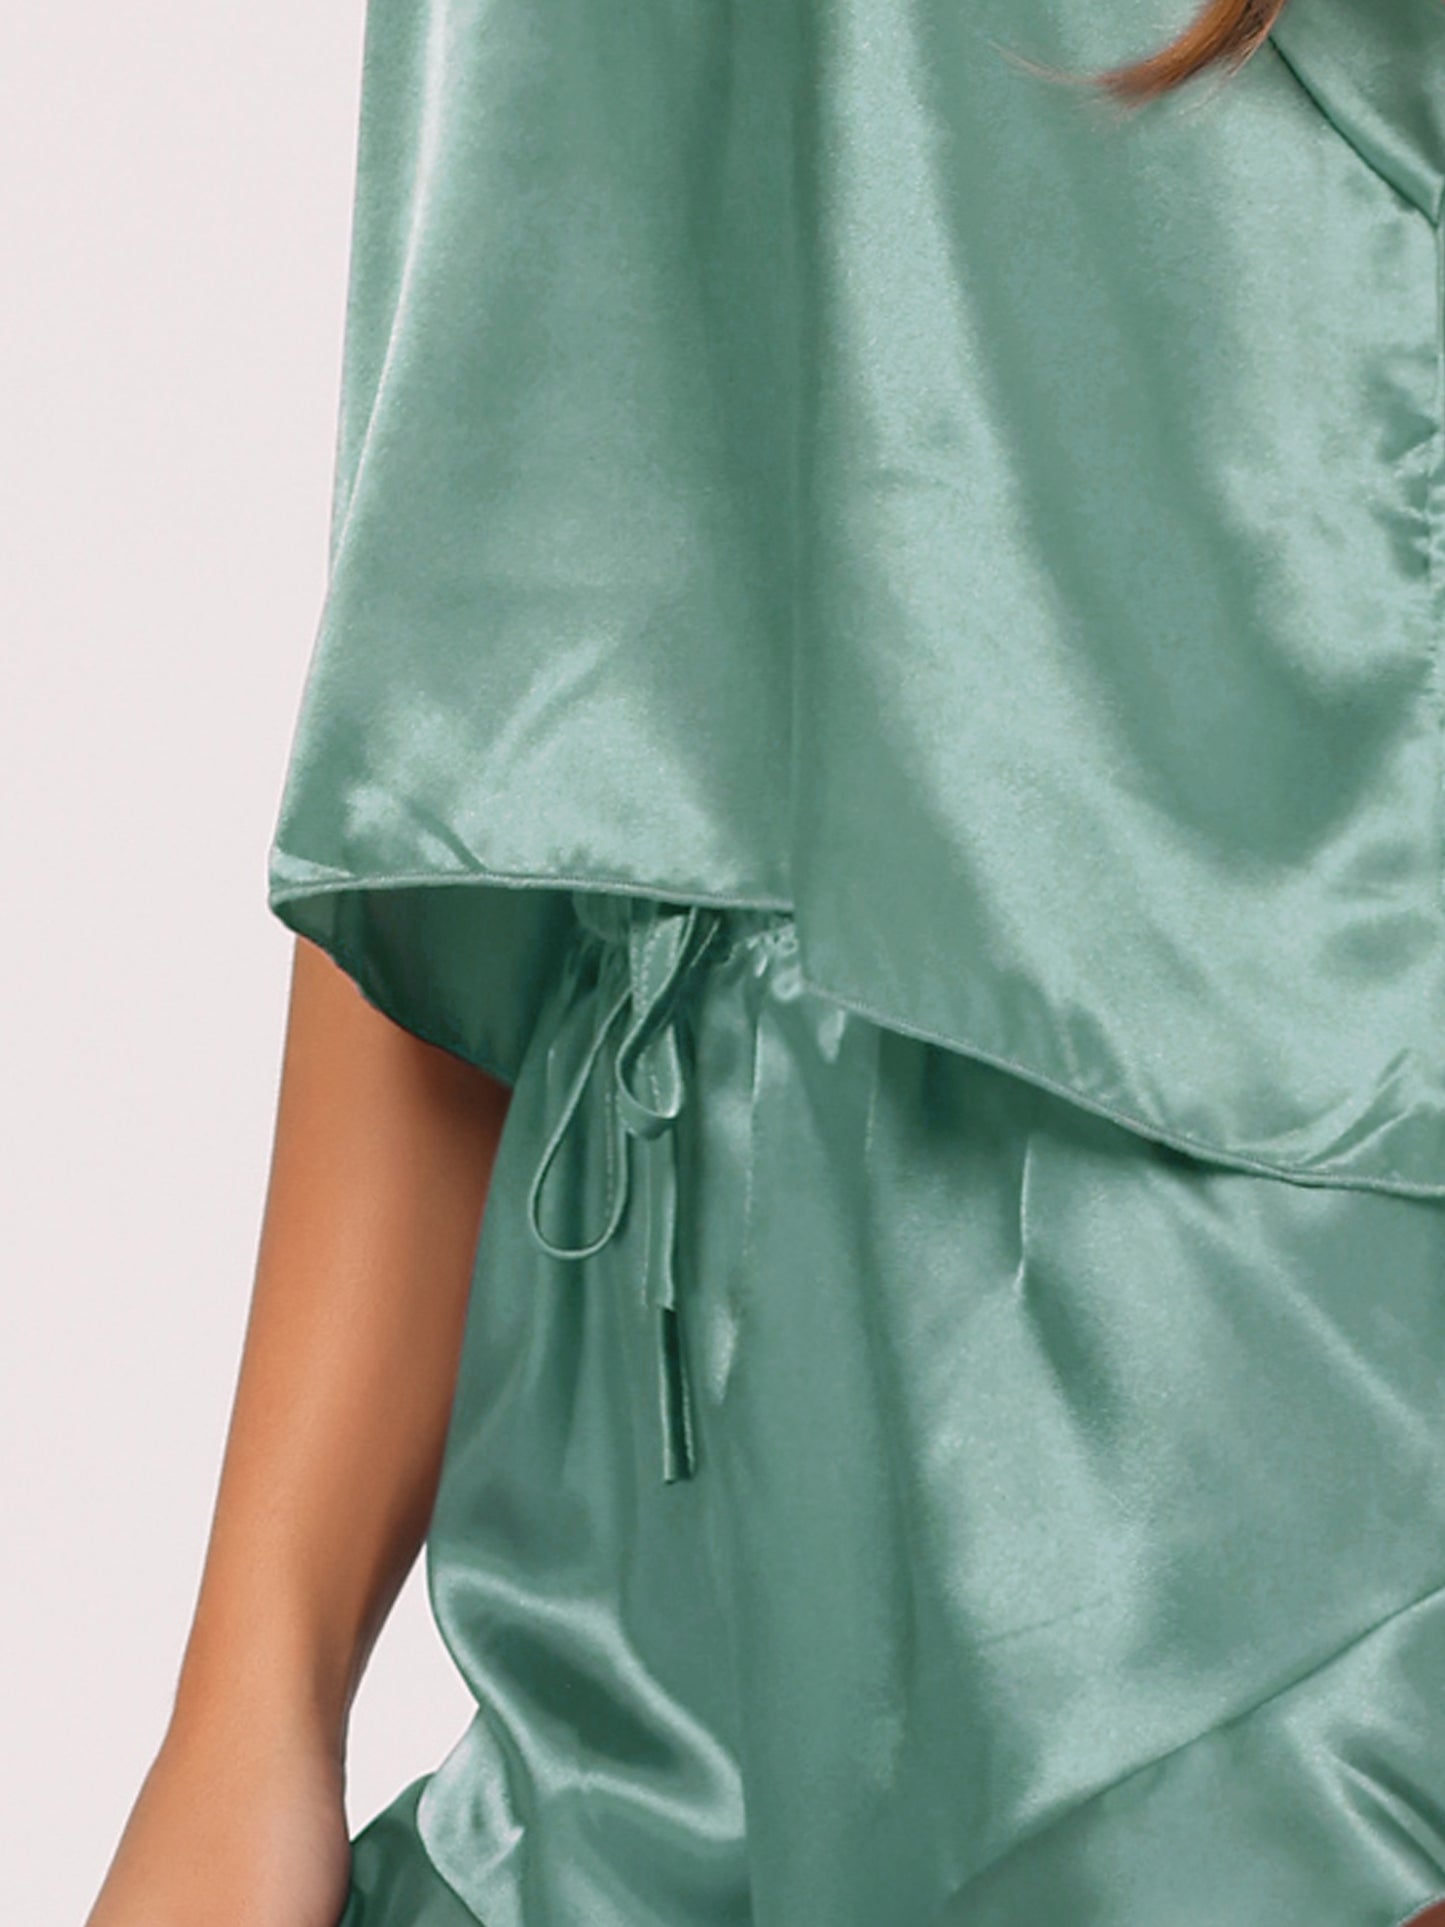 cheibear Satin Lingerie Cami Tops Shorts Sleepwear Pajamas Sets Gray Green